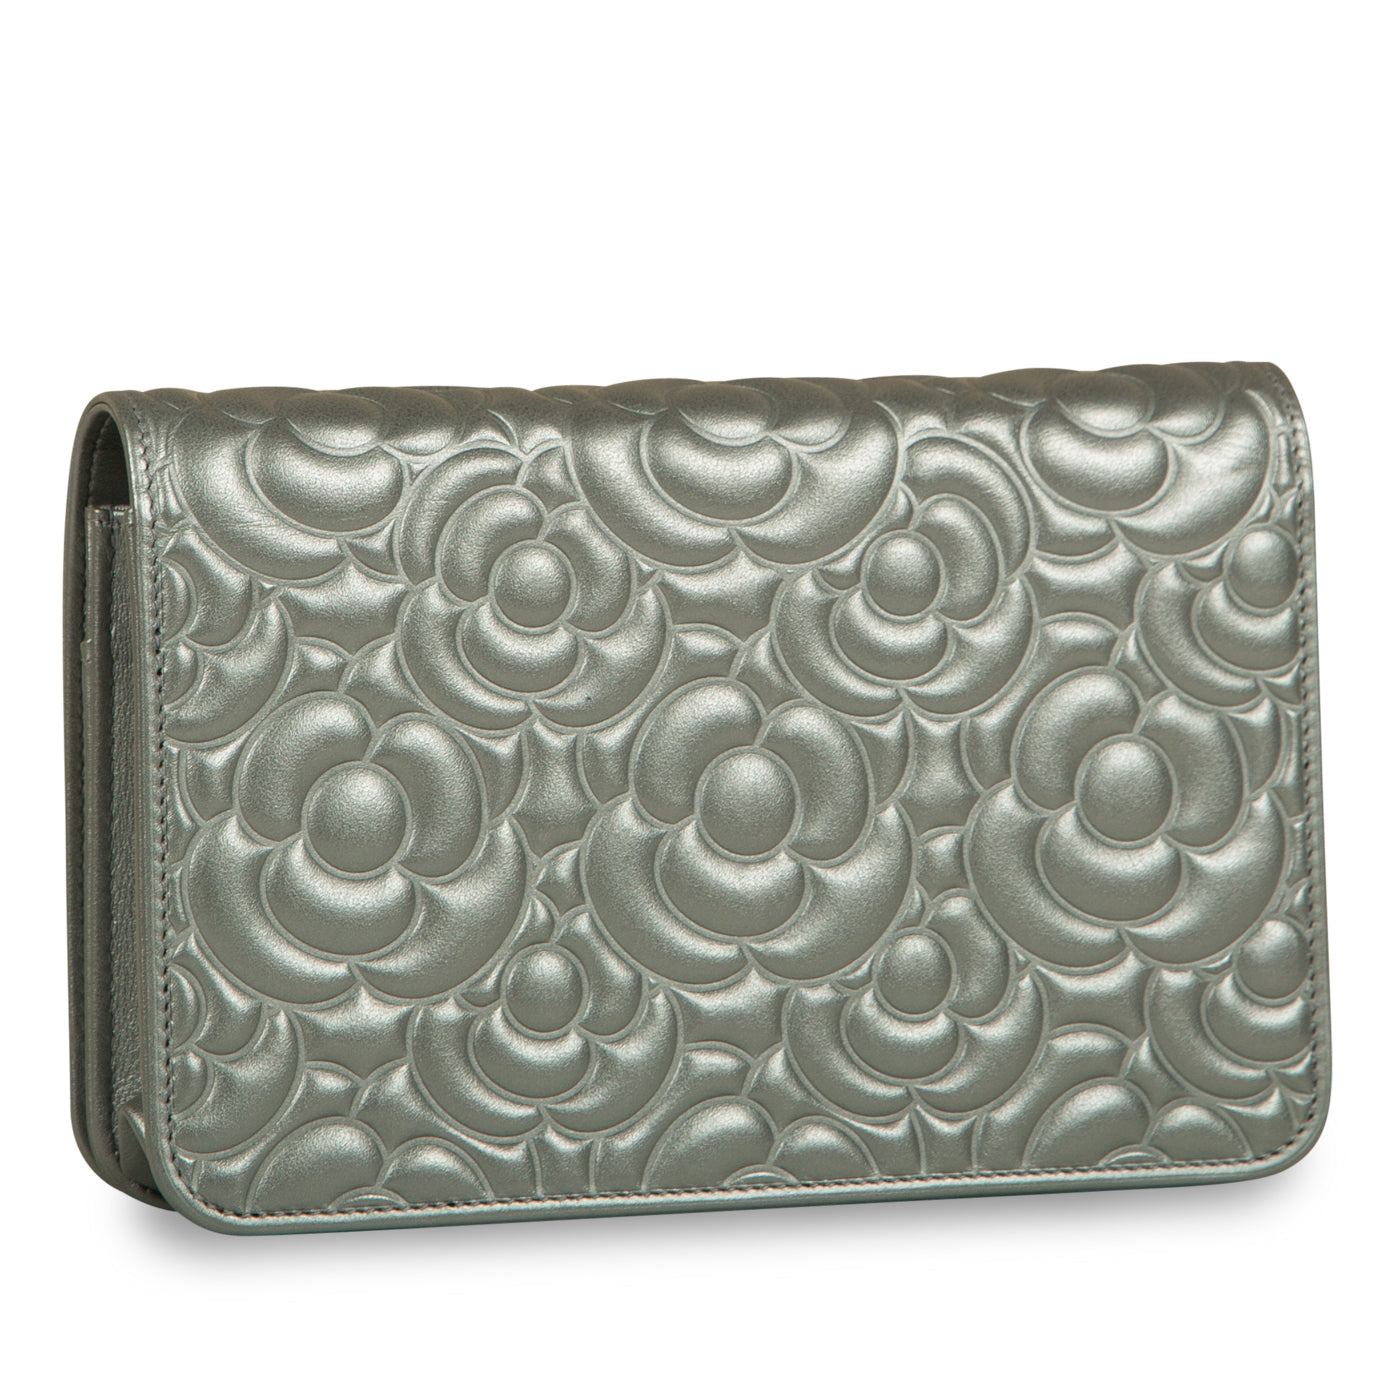 Chanel - Wallet on Chain - Silver Hardware - Calfskin - Diamante